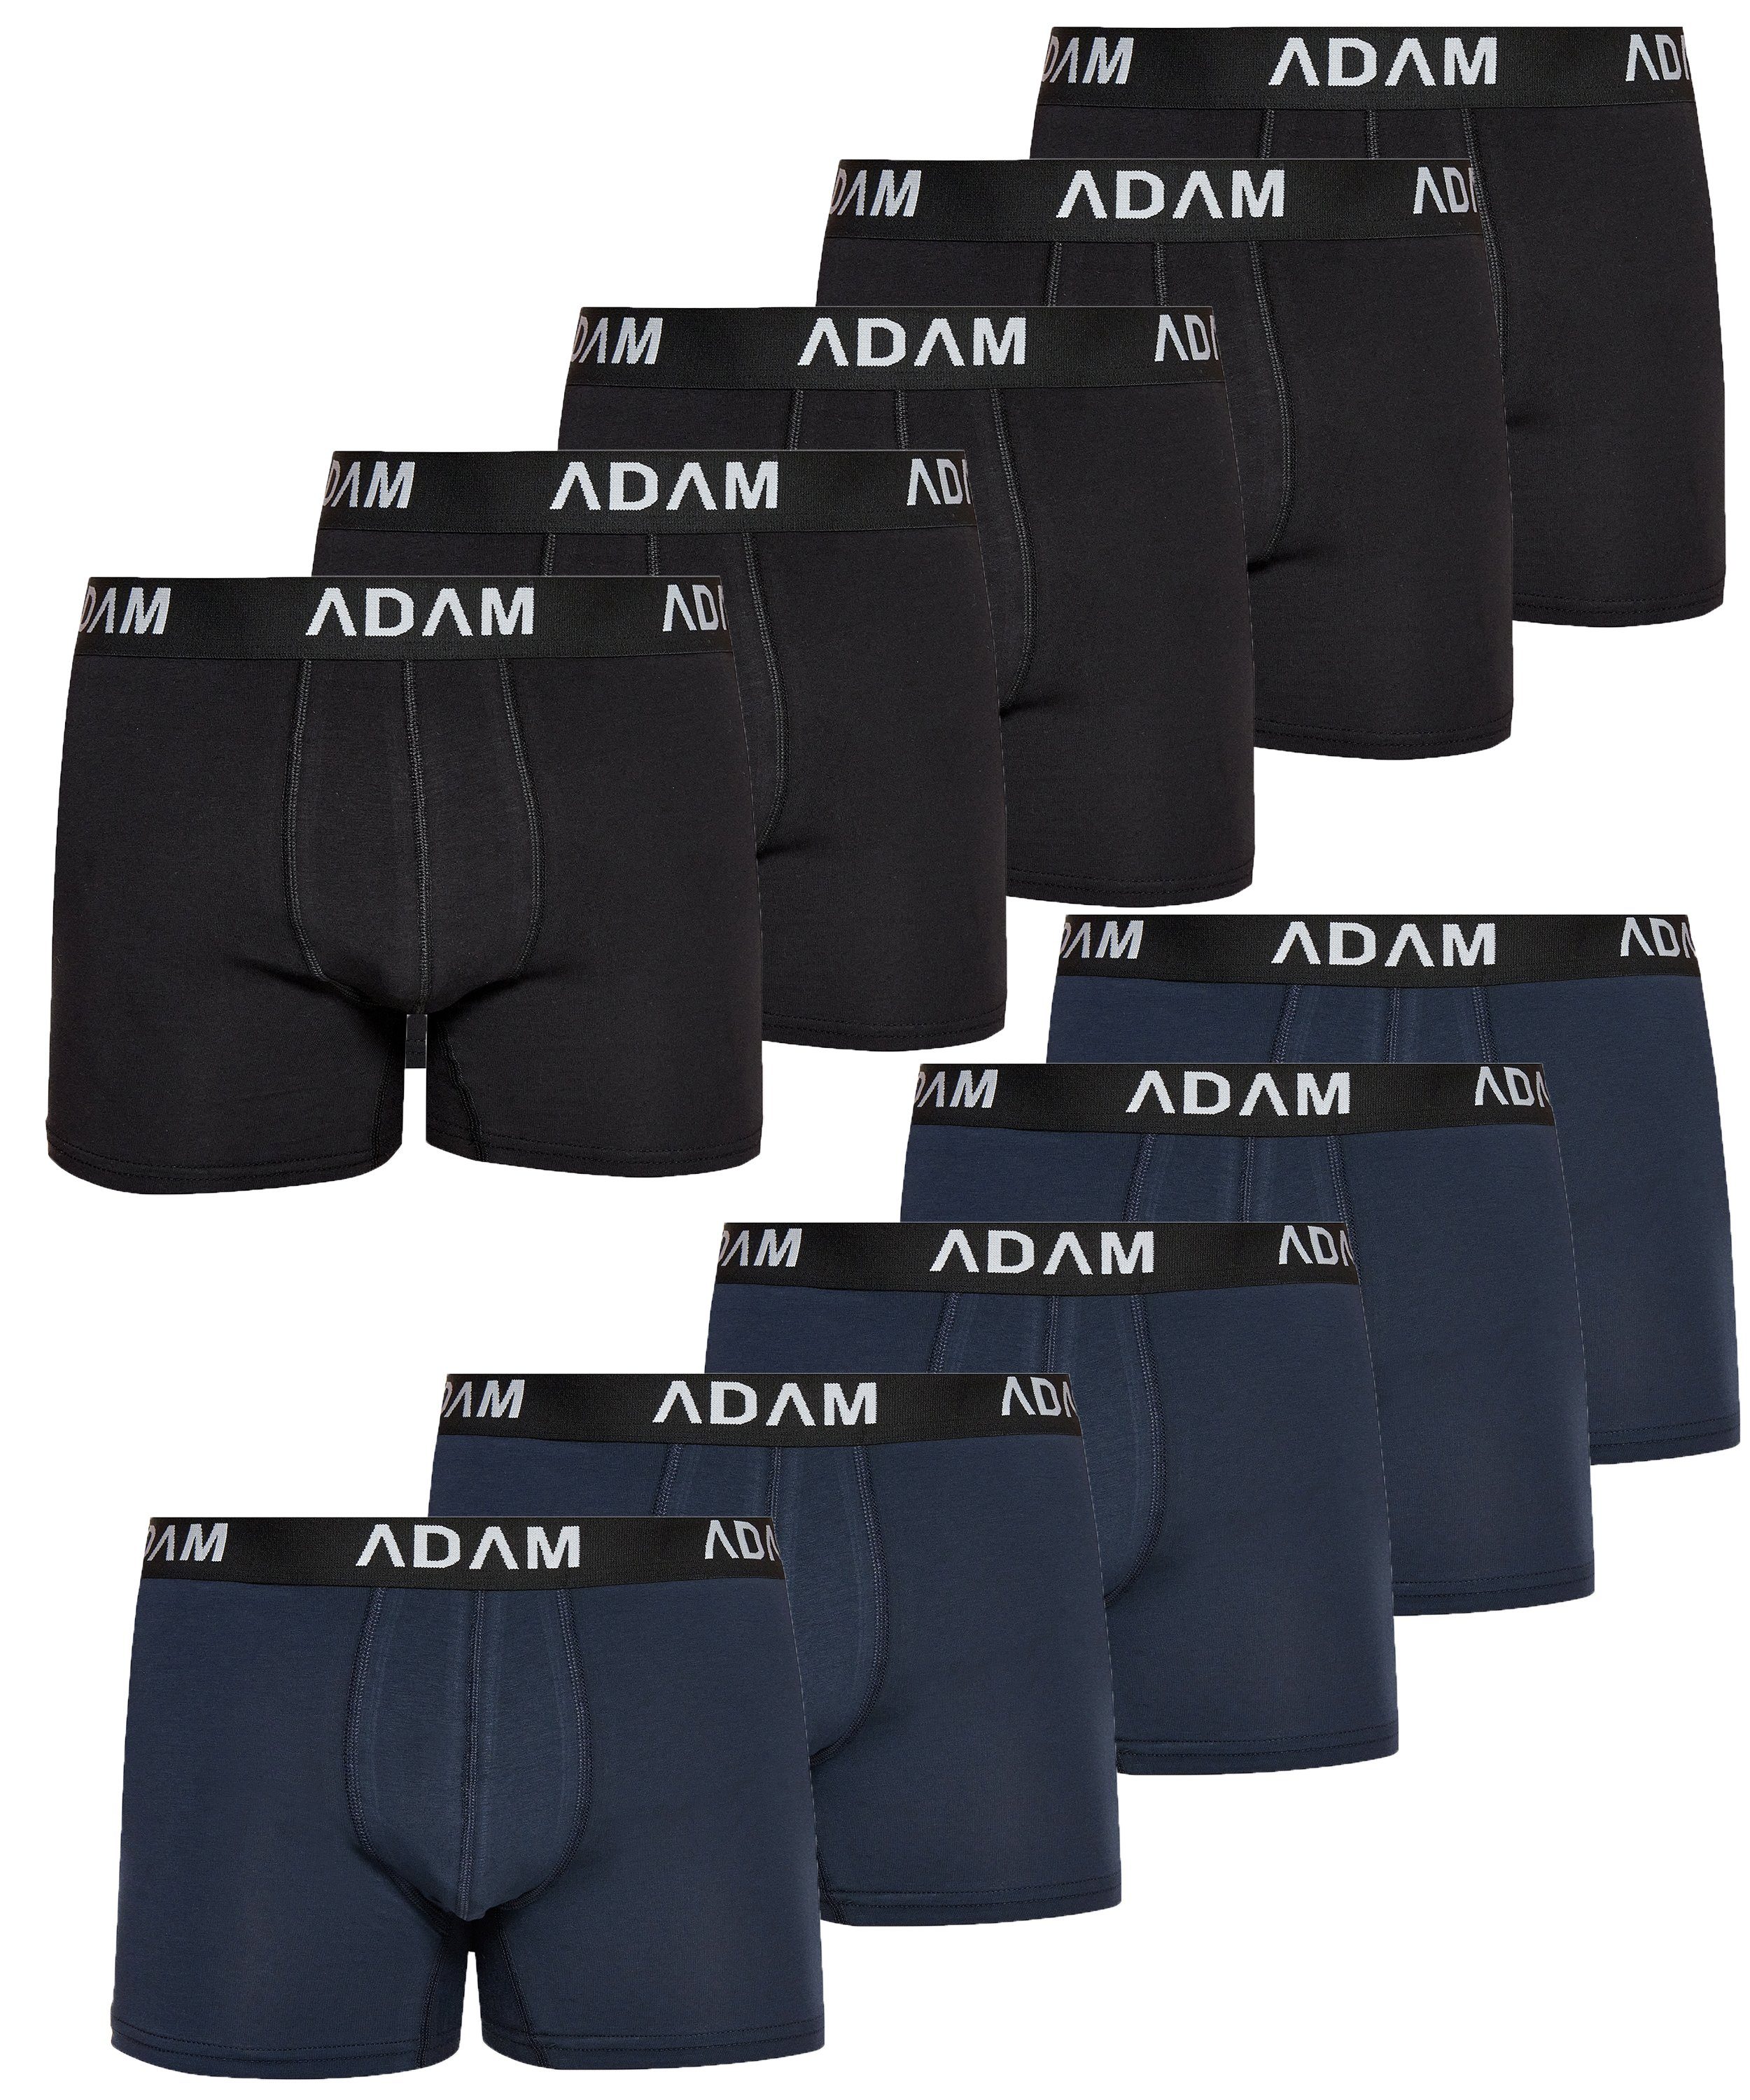 ADAM JEANS Boxershorts Boxer-1 (10-St., 6er Set, 8er Set, 10er Set, 12er Set) Boxershorts Herren Boxer Shorts Männer Unterhosen Trunks Underwear 10er Set Box-D